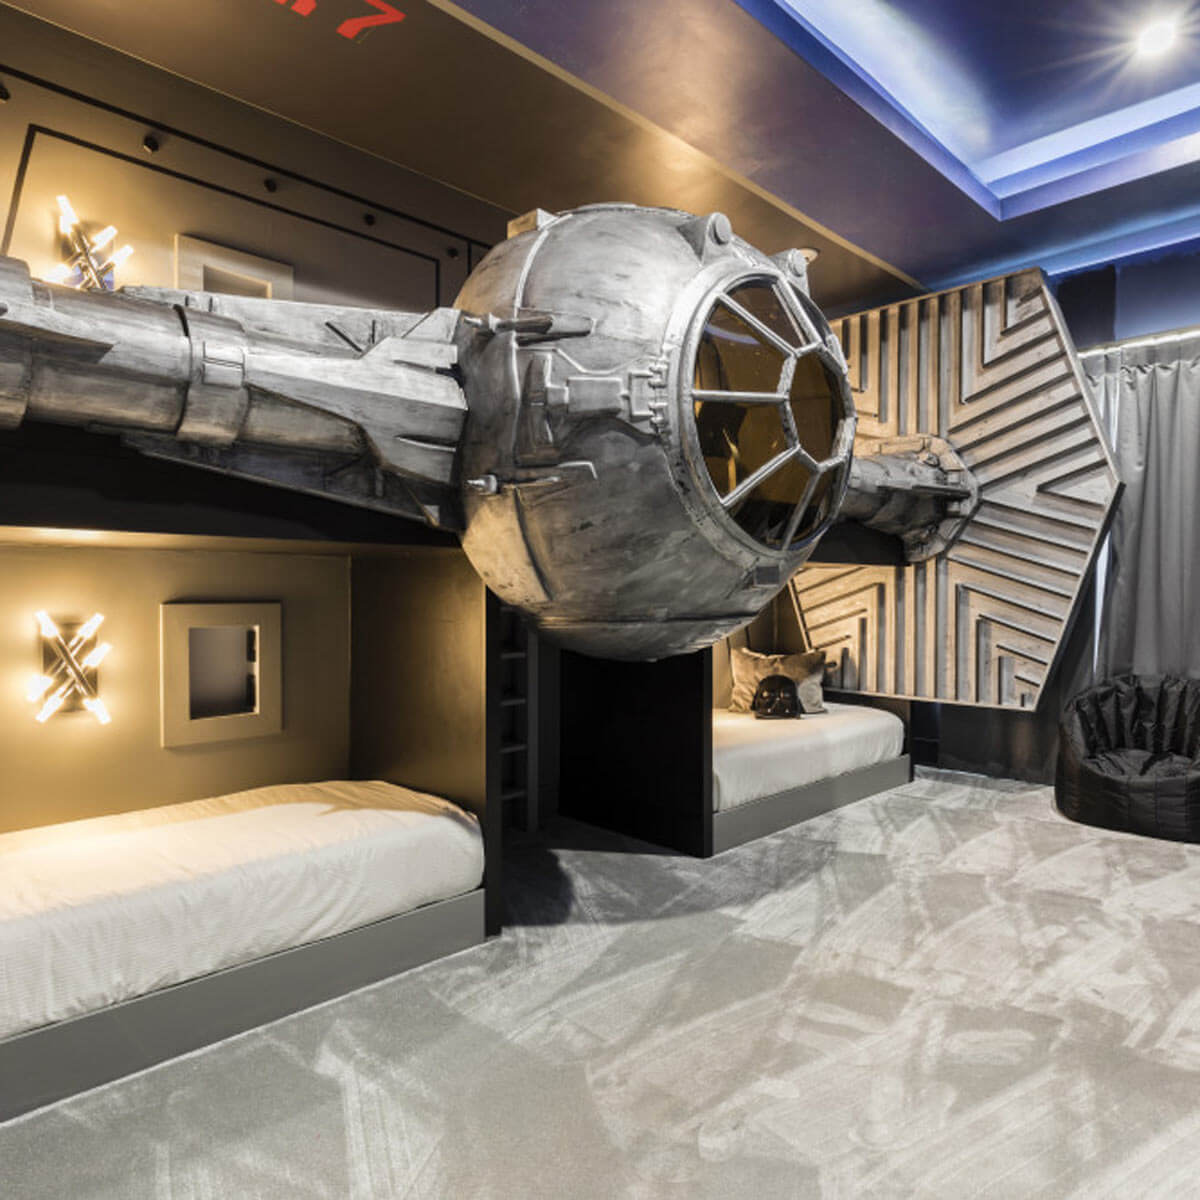 Fantastic Star Wars bedroom